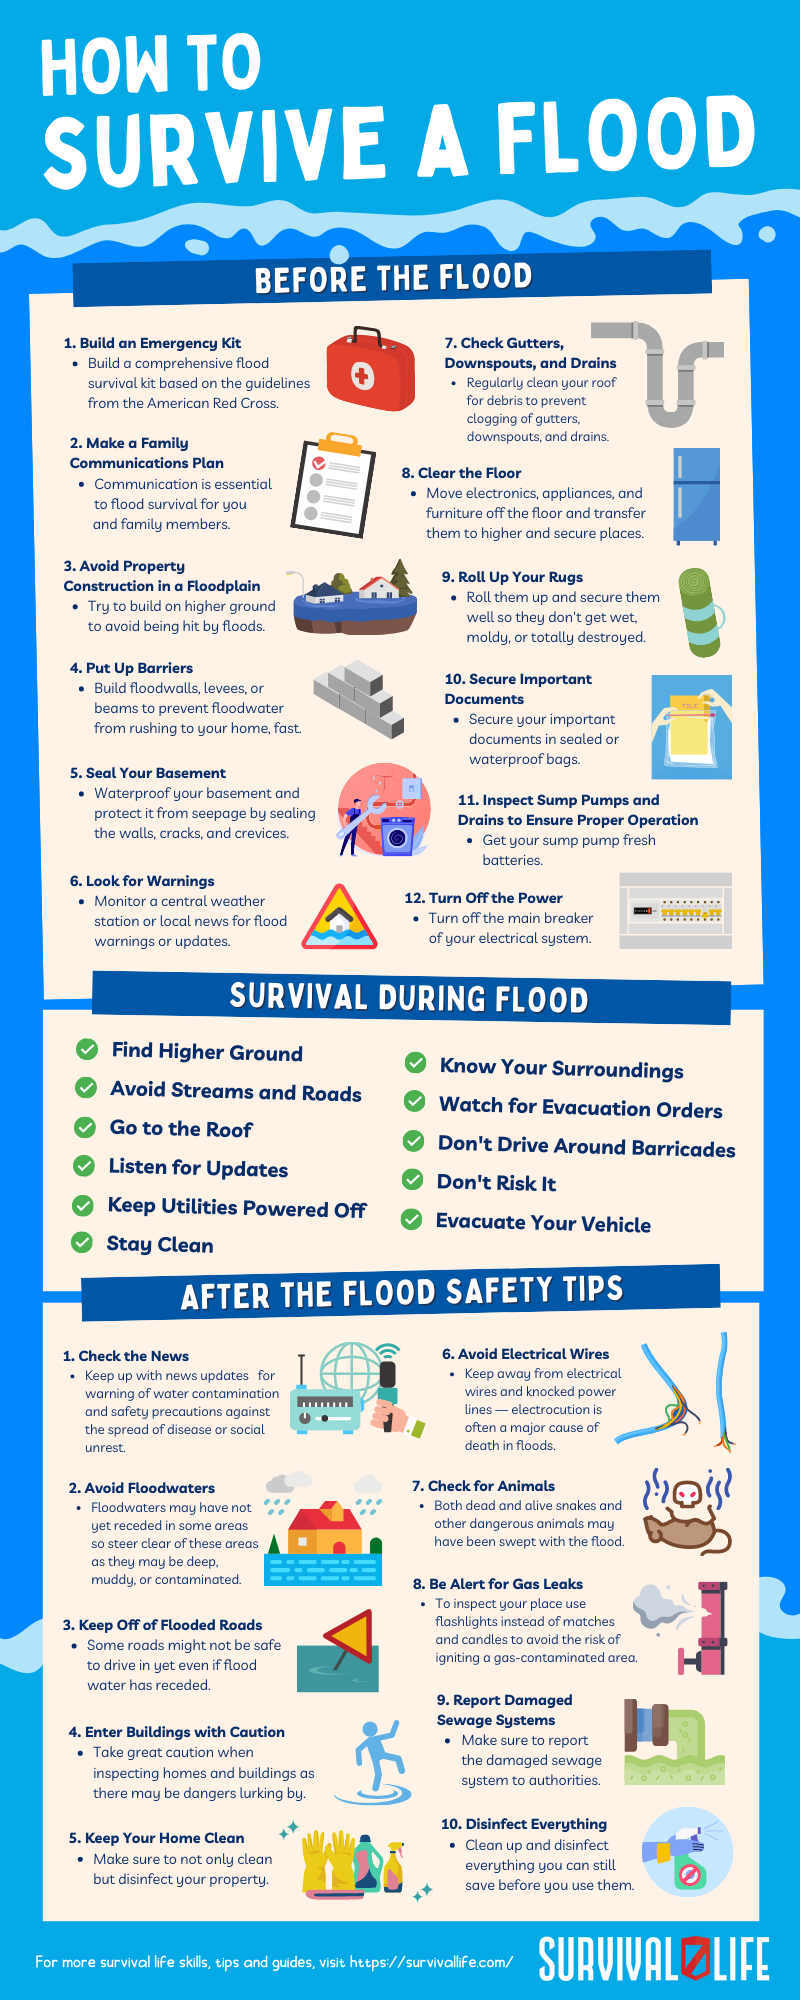 SL - Flood Survival Tips